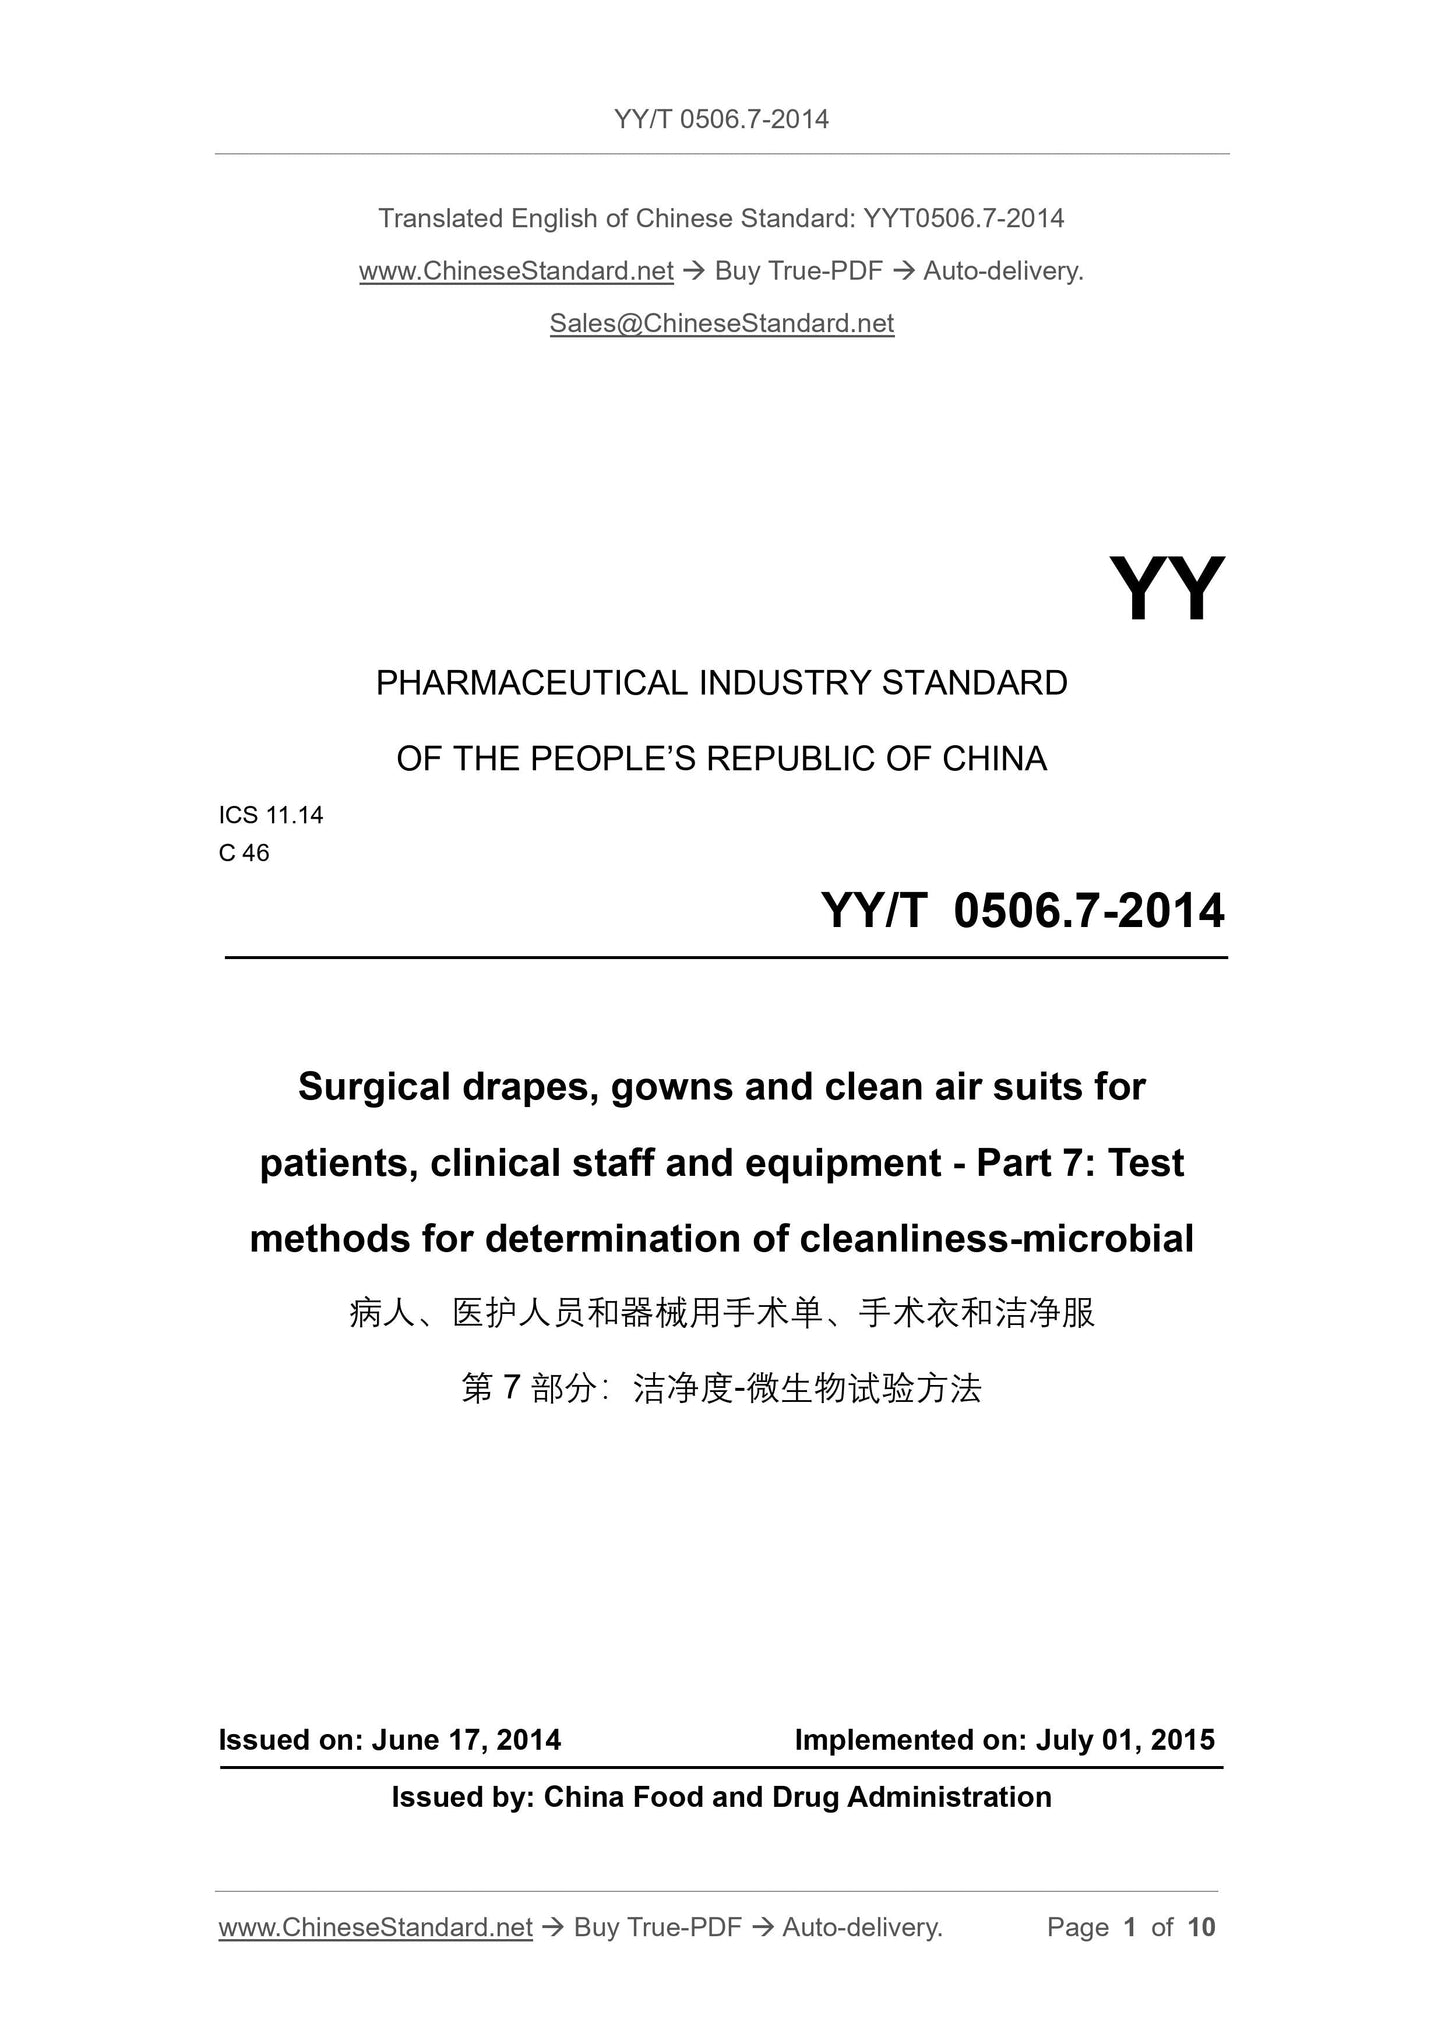 YY/T 0506.7-2014 Page 1